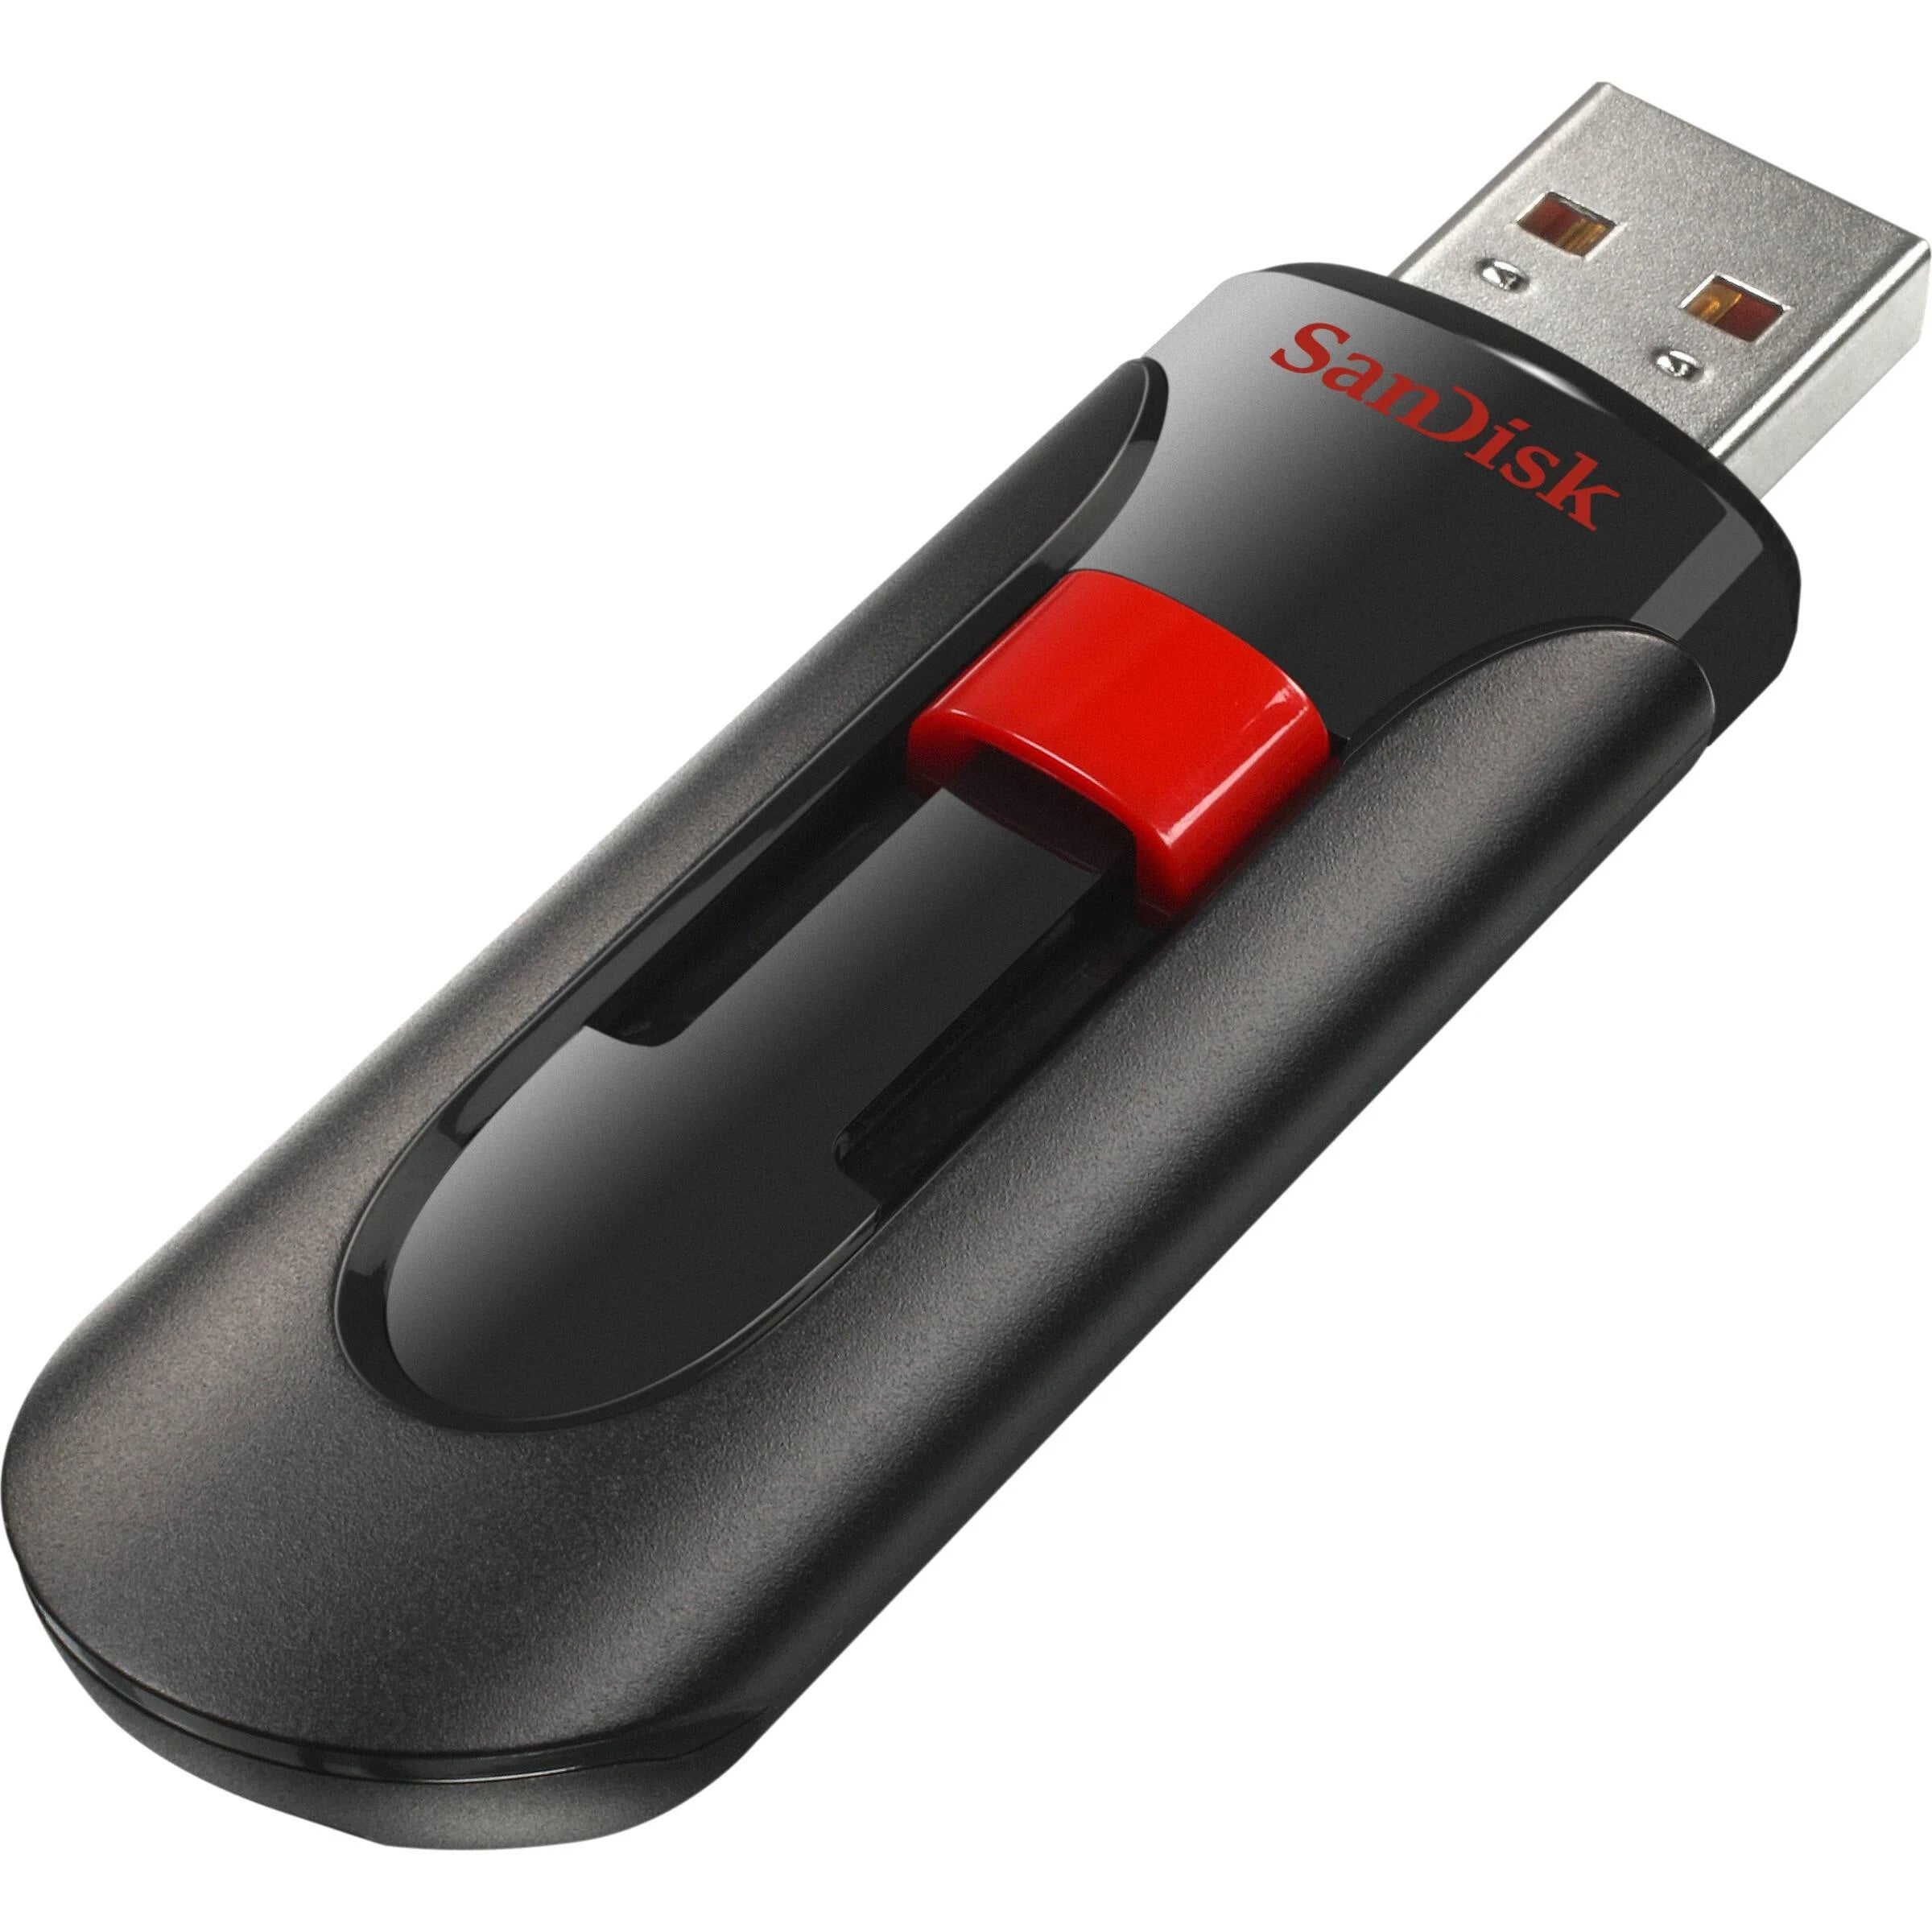 Sandisk CRUZER GLIDE USB 3.0 FLASH DRIVE 16GB